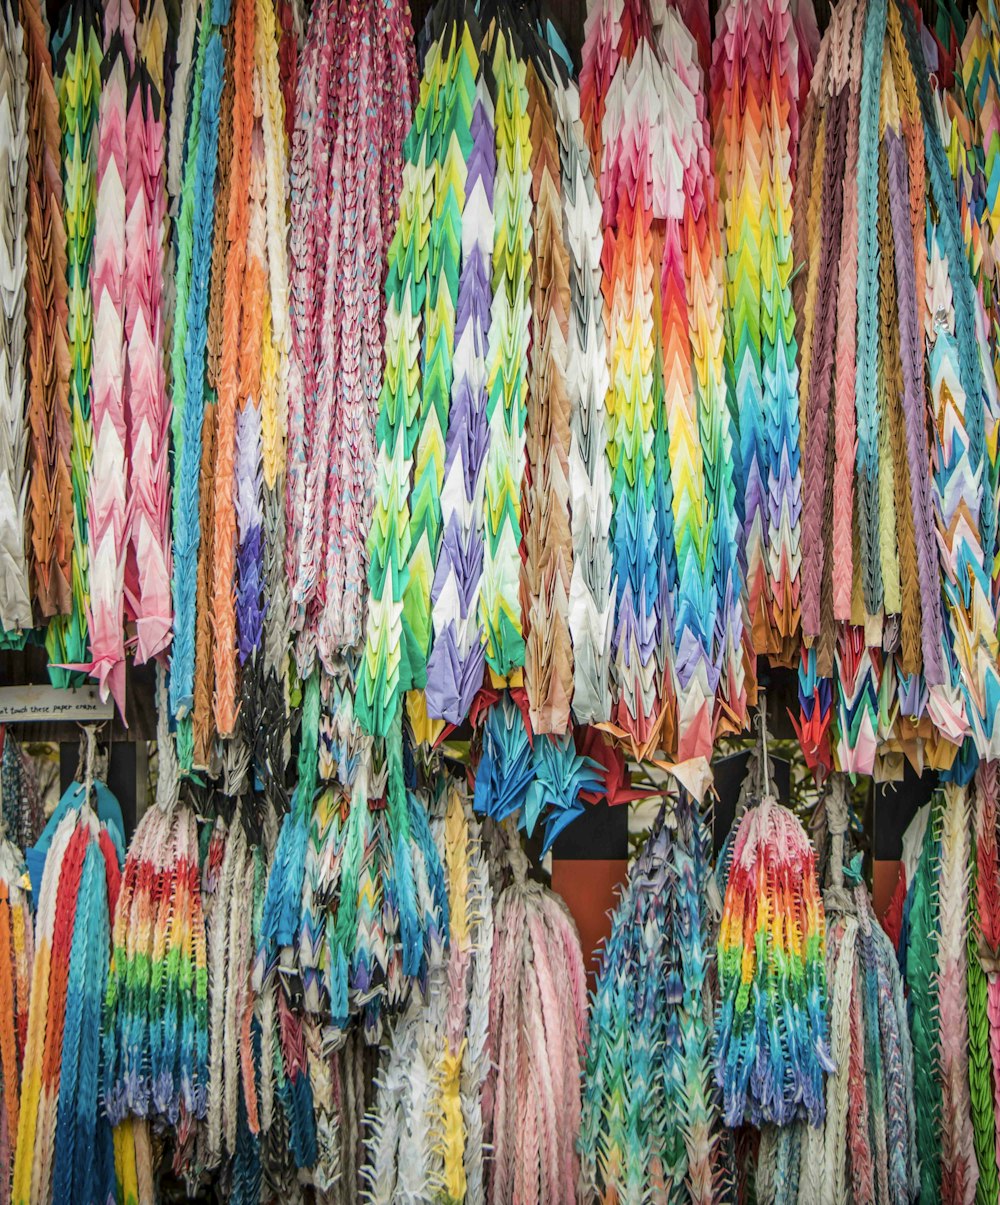 multicolored fabrics hanging on walls